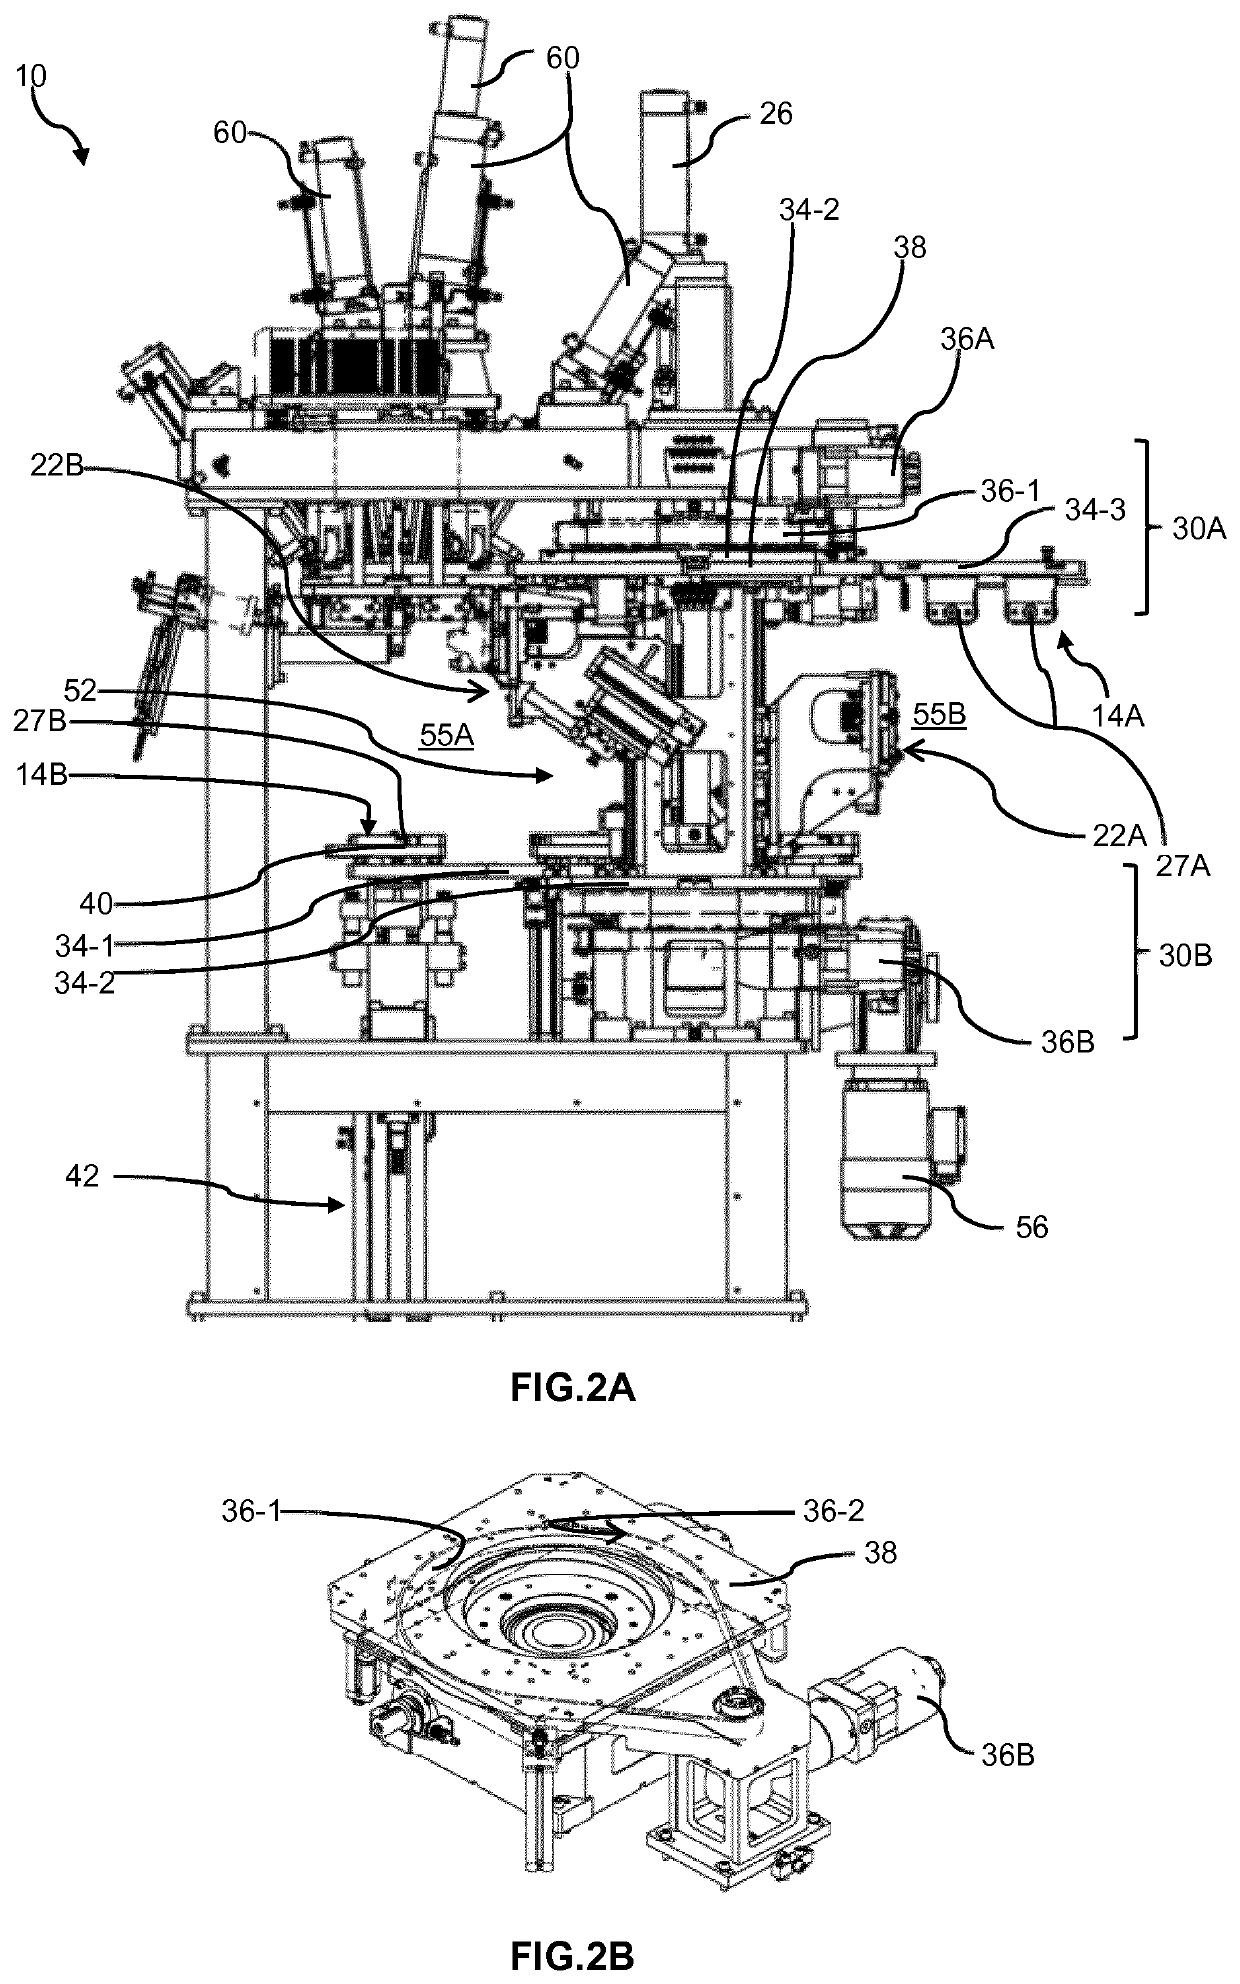 Leak test machine for cylinder head, engine block, or a similar workpiece